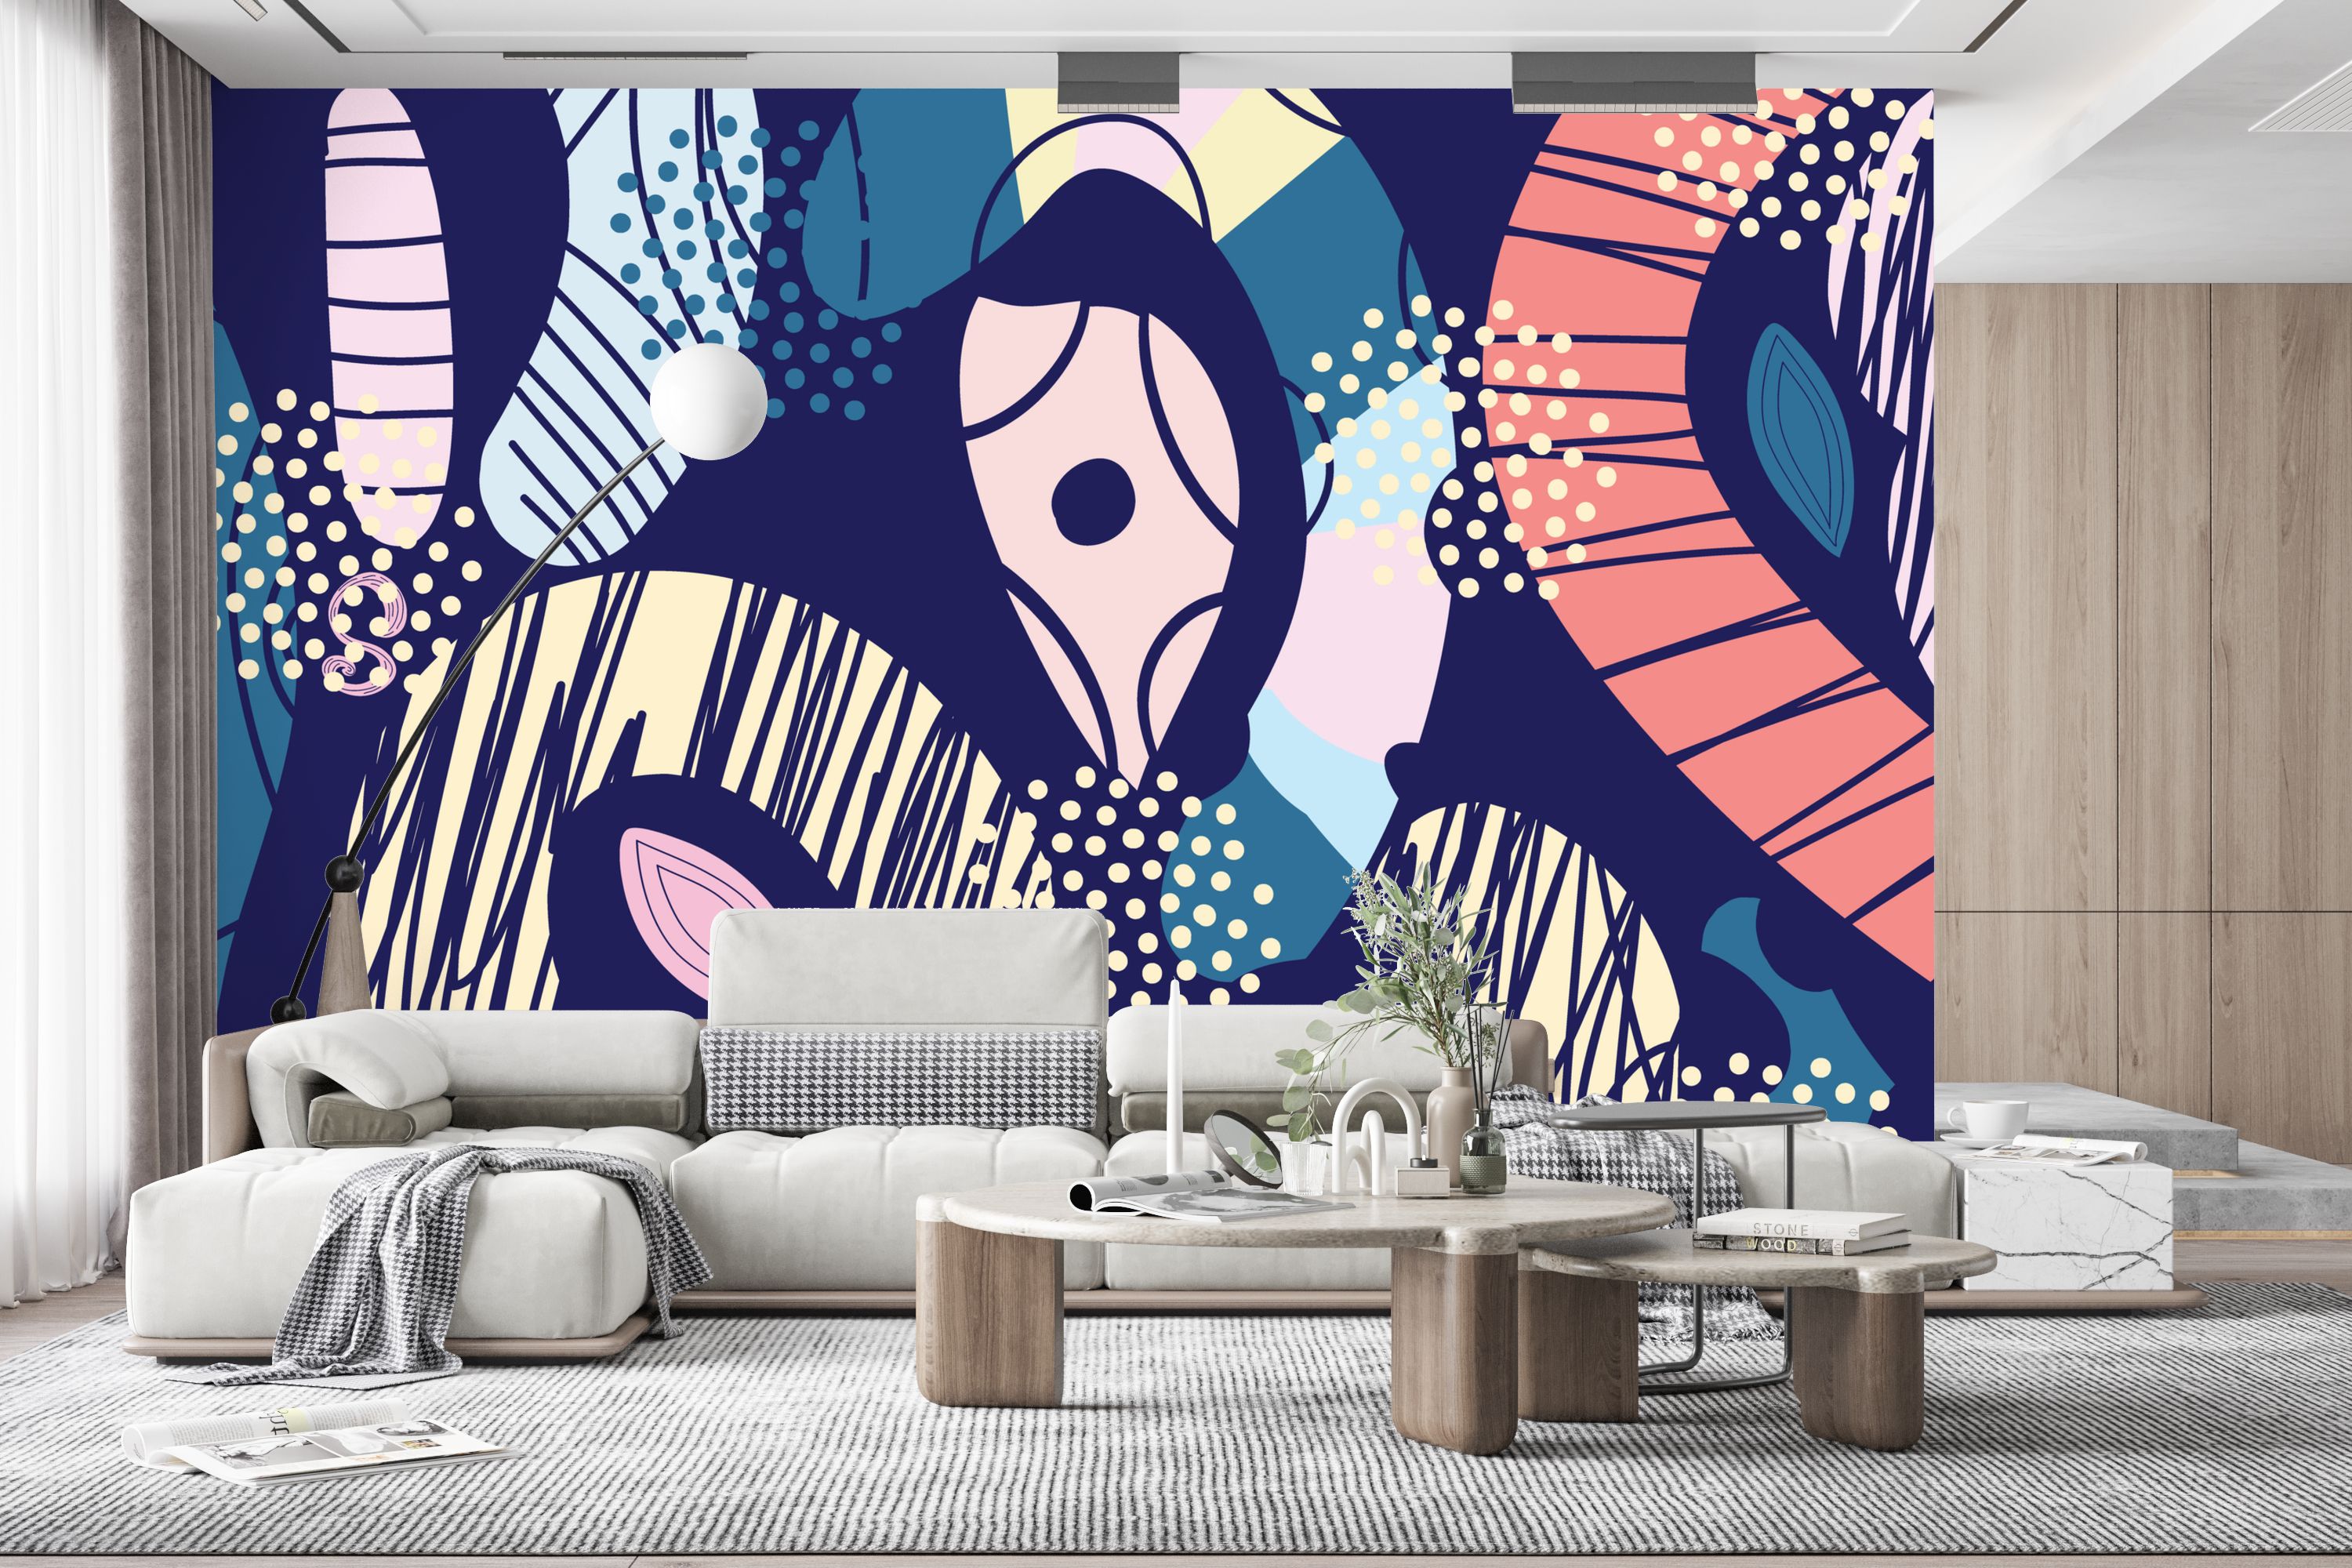 Fruit of Eden premium wallpaper mural | Wallism | A creative revolution ...